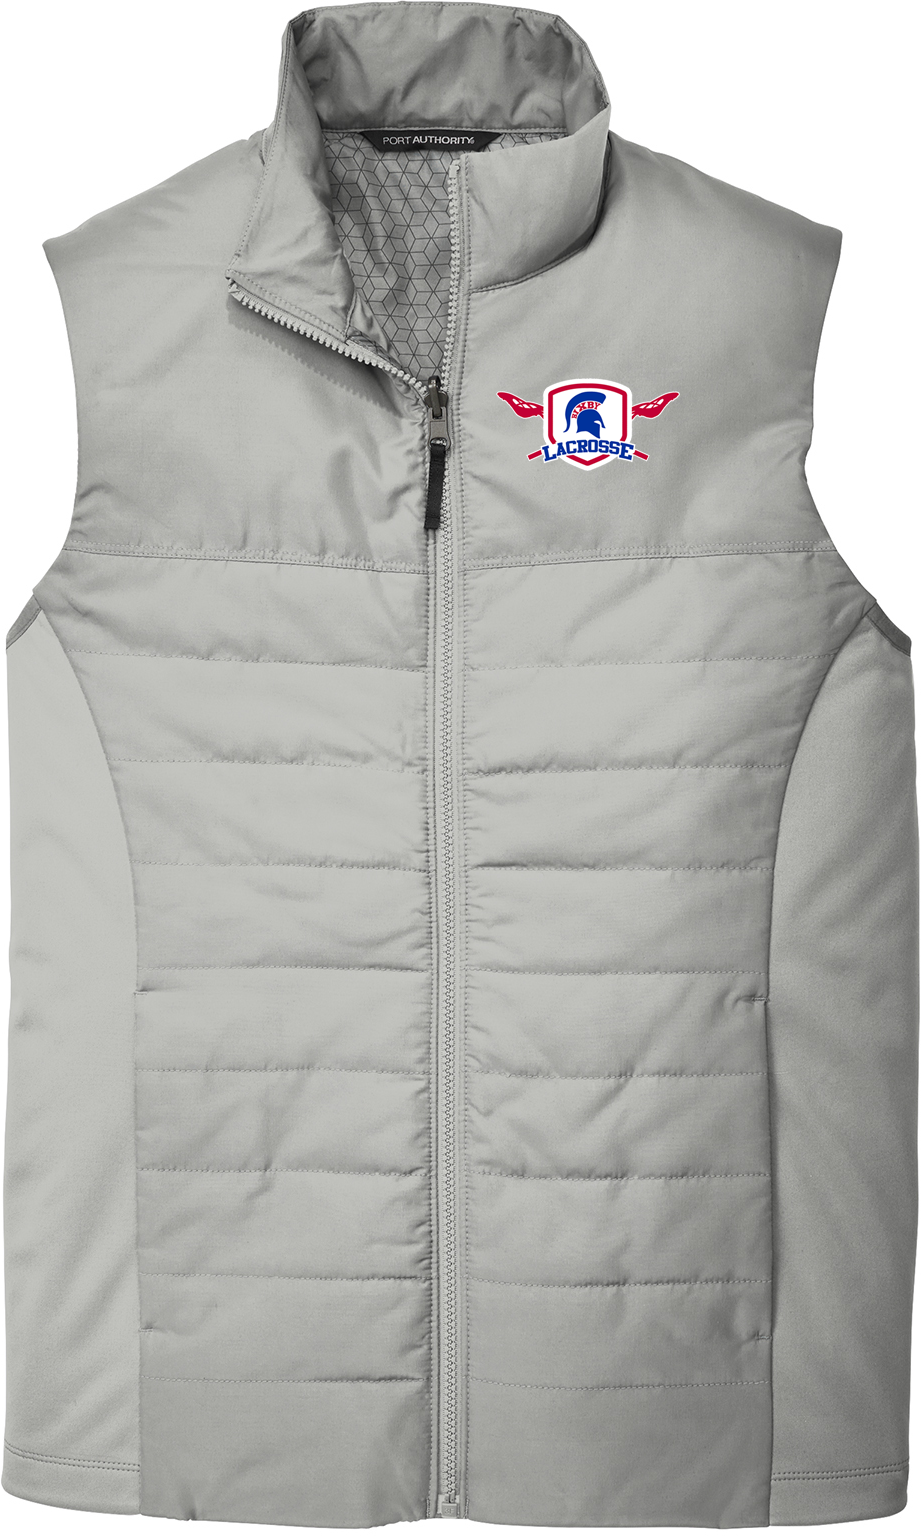 Bixby Lacrosse Grey Vest